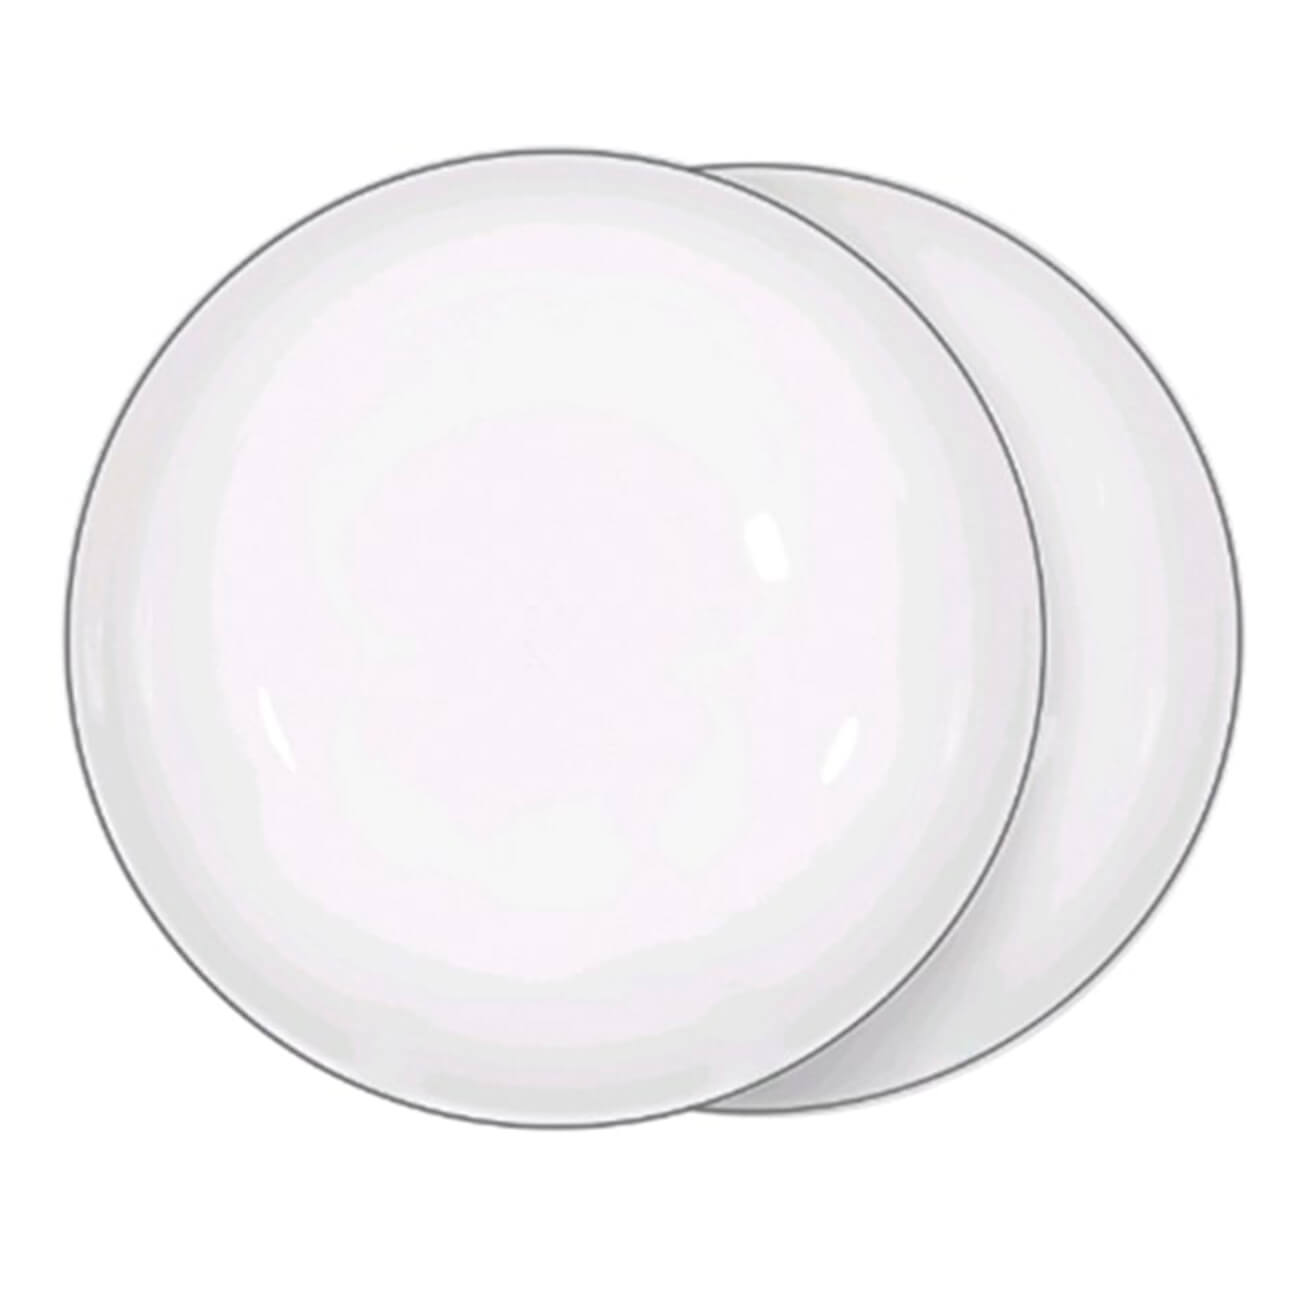 Тарелка суповая, 20х5 см, 2 шт, фарфор F, белая, Ideal silver суповая тарелка greenmaster